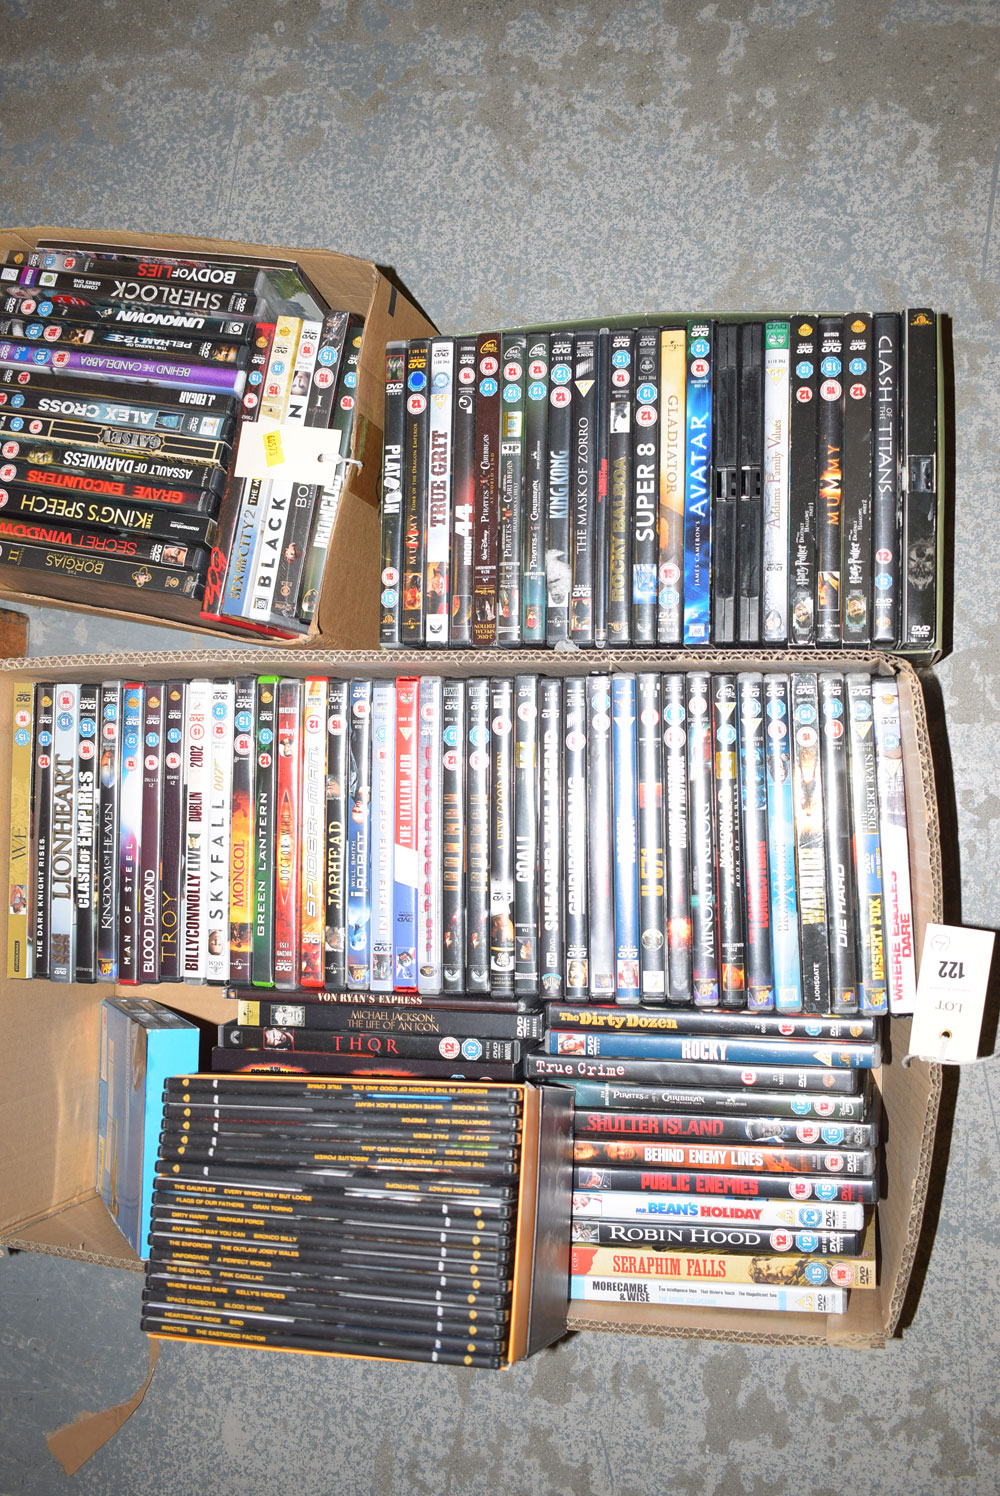 Four boxes of DVD's, including, "True Grit", "Toon", "Public Enemies", "The Kings Speech", etc.